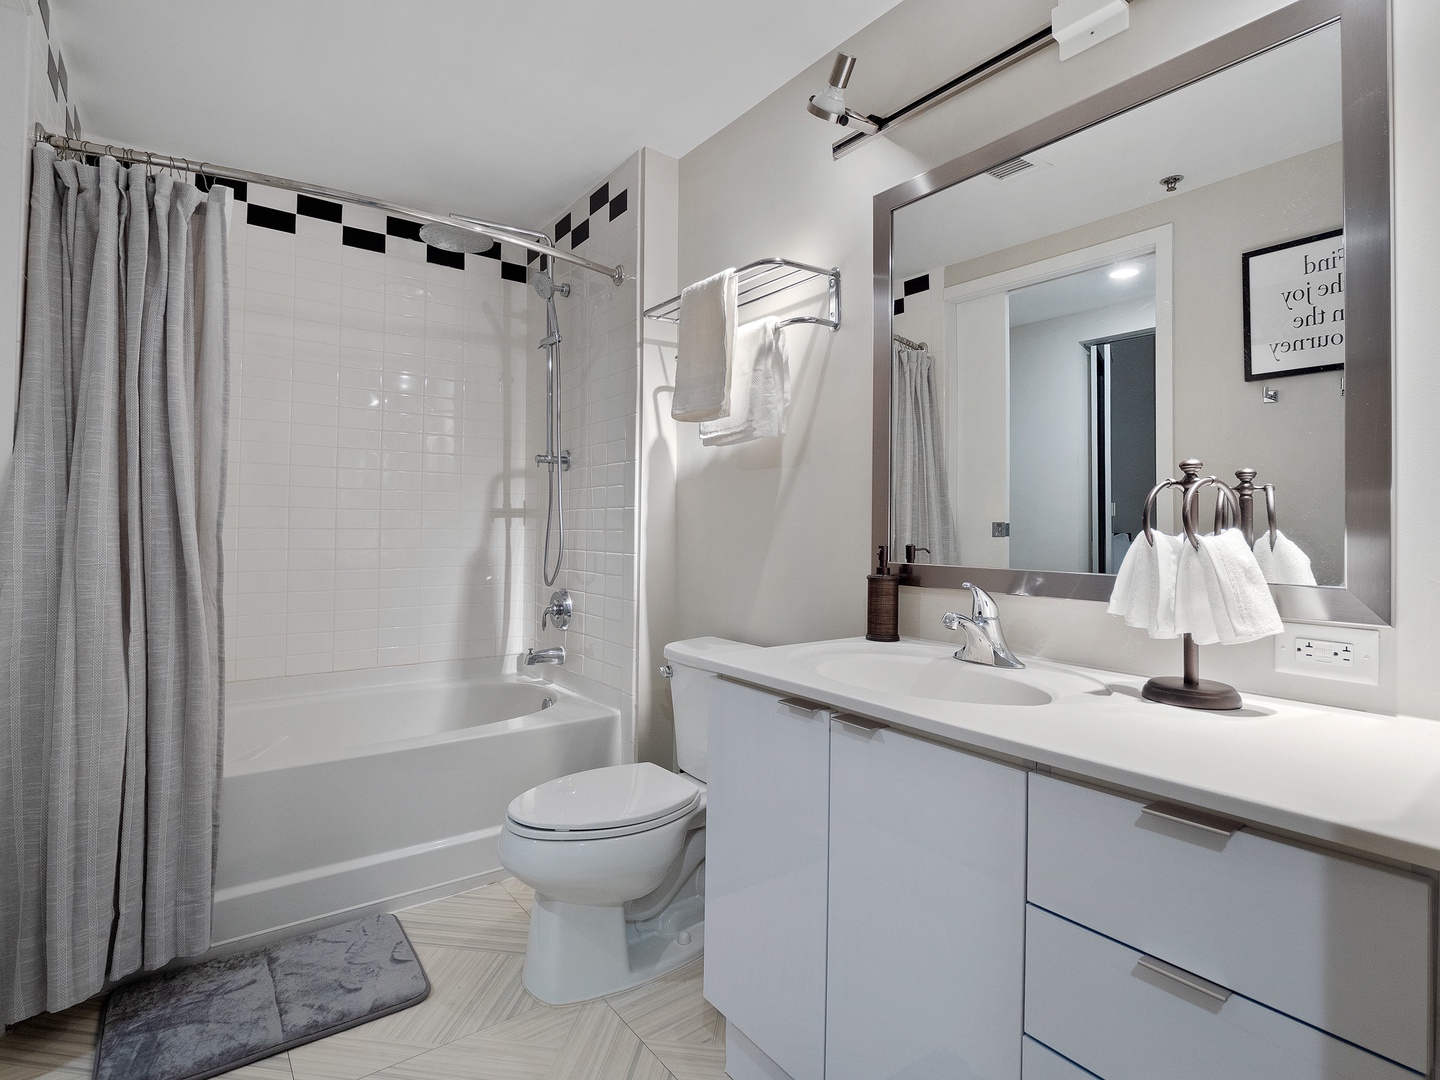 Refresh and rejuvenate in this elegant and spacious bathroom